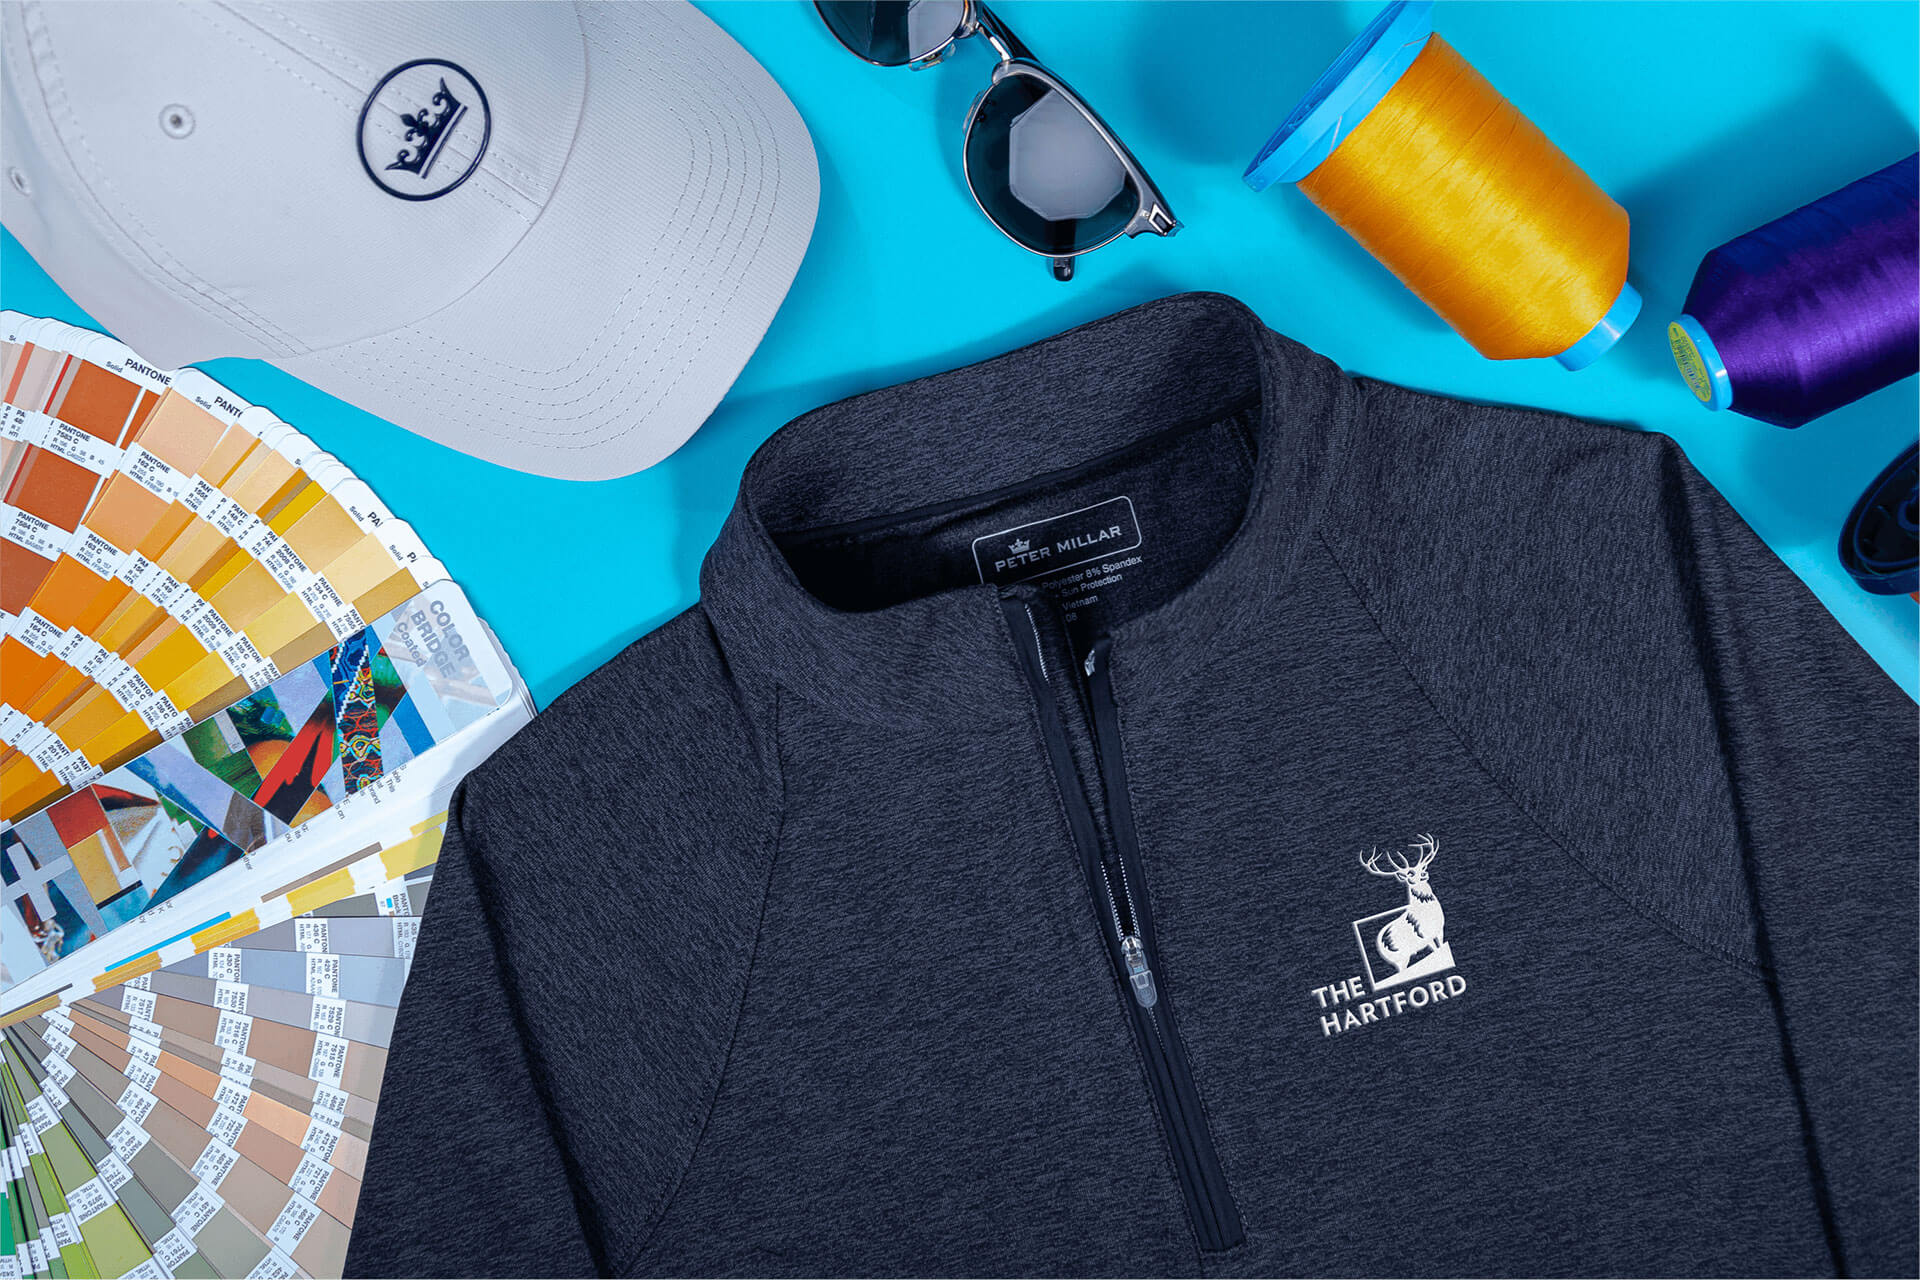 Peter Millar Golf Apparel Represents Your Brand Professionally